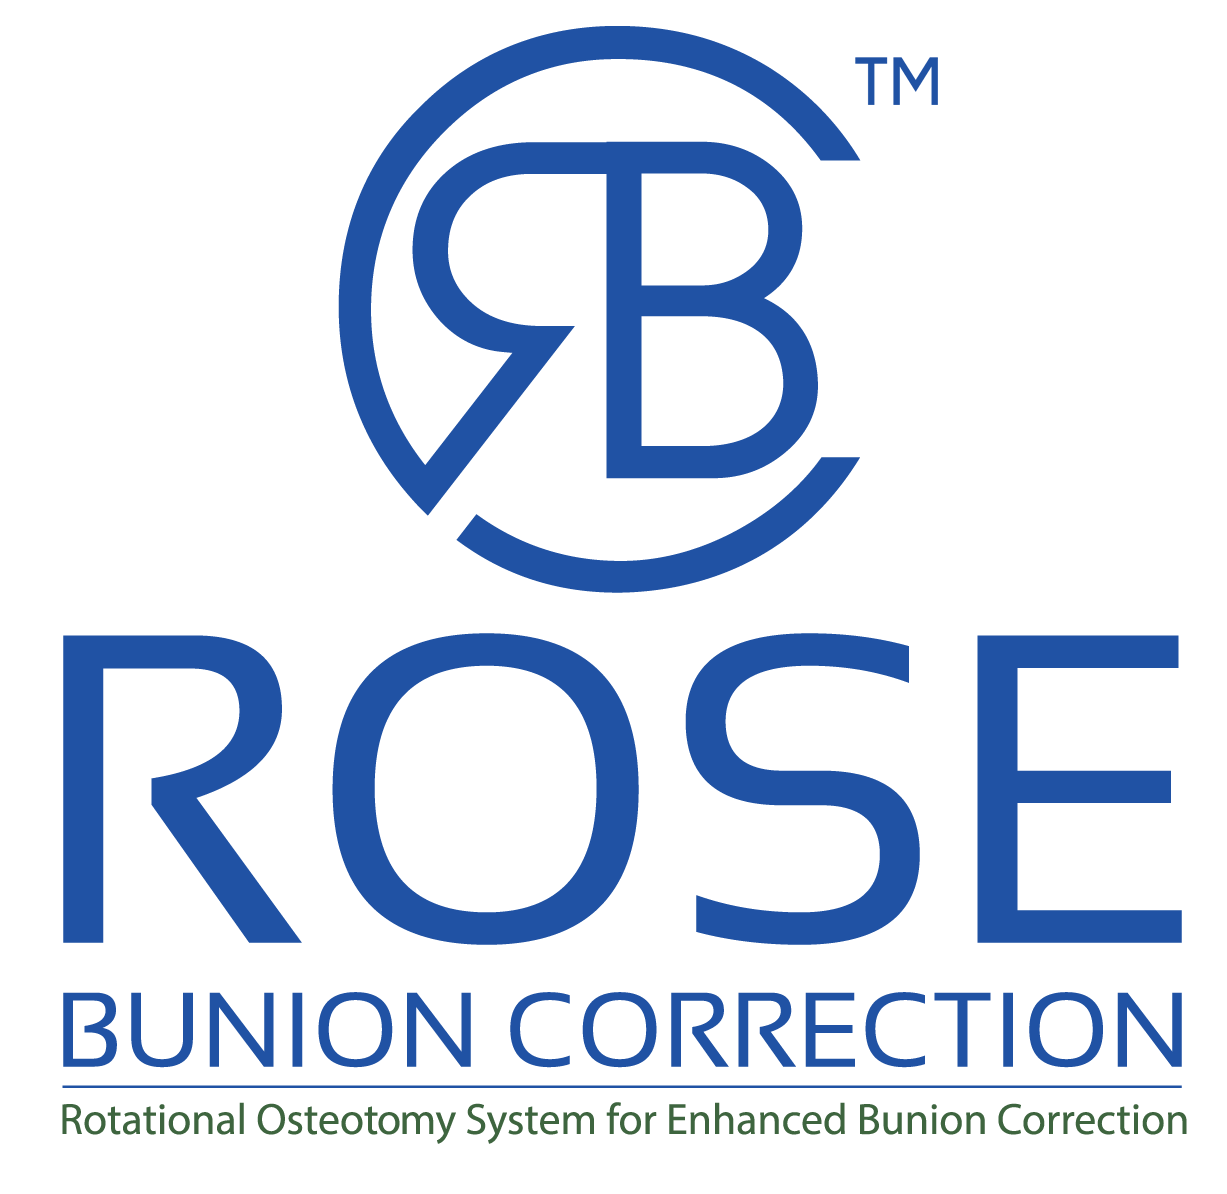 ROSE™ Bunion Correction - Rotational Osteotomy System for Enhanced Bunion Correction